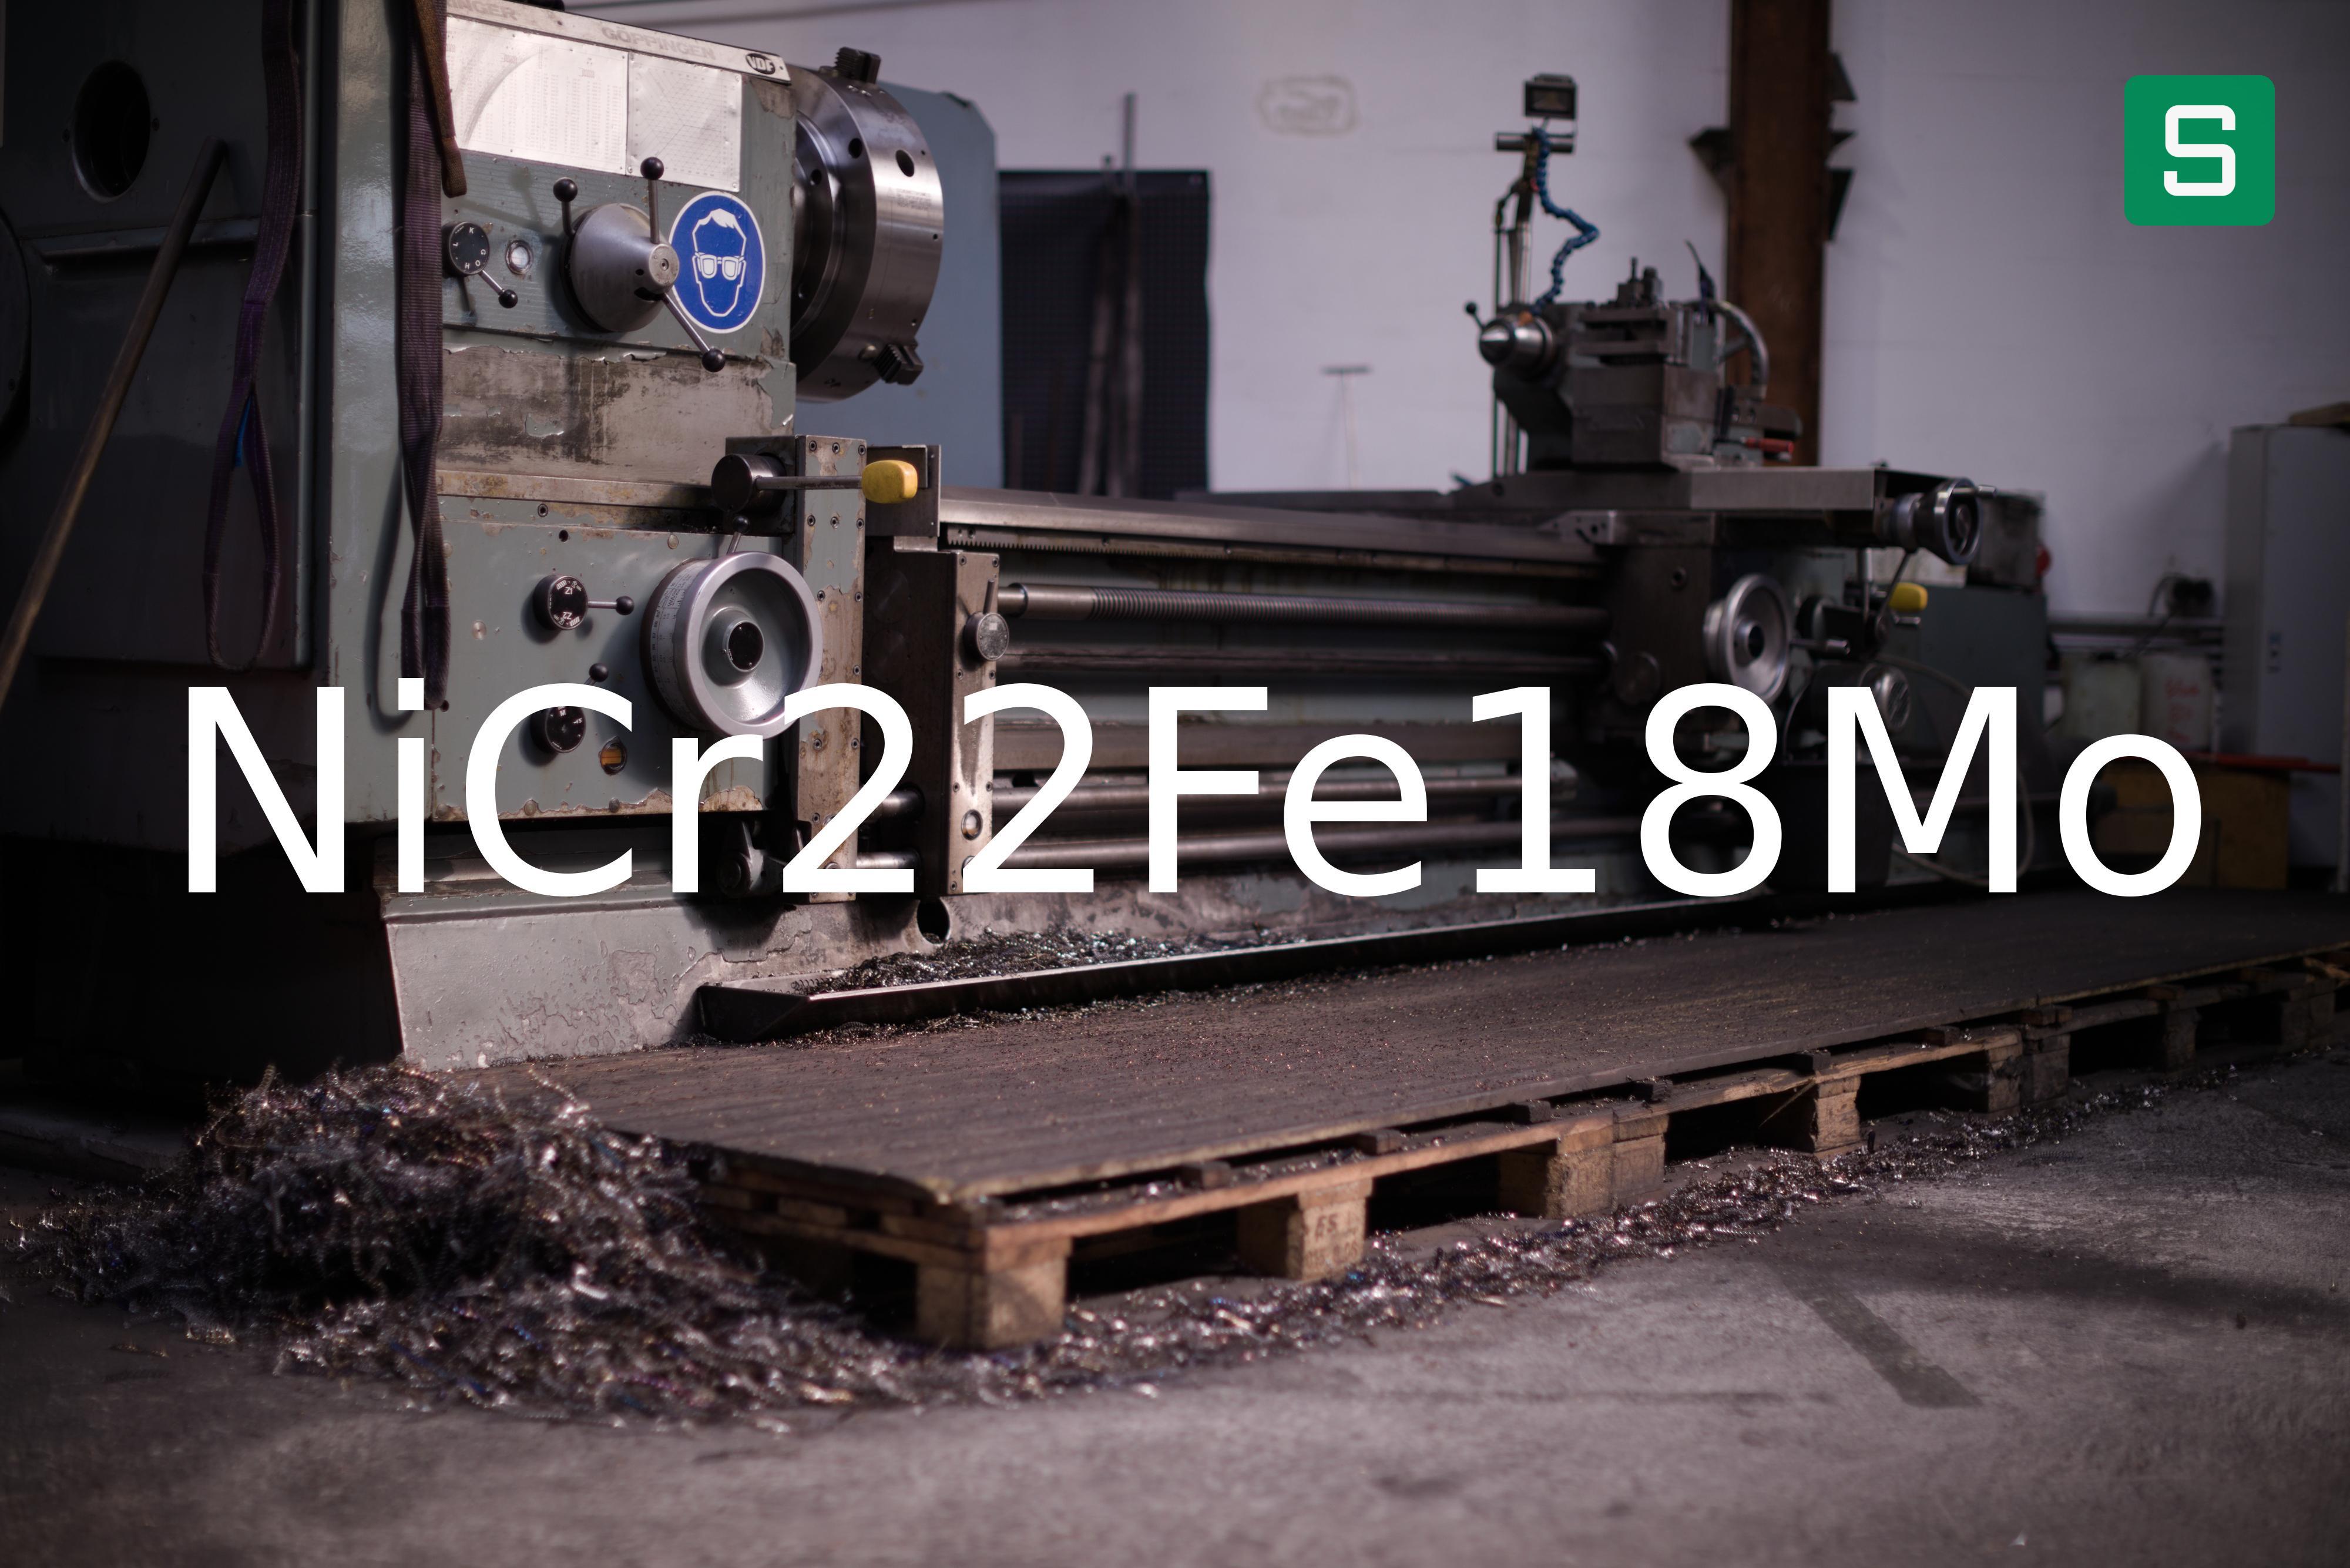 Steel Material: NiCr22Fe18Mo